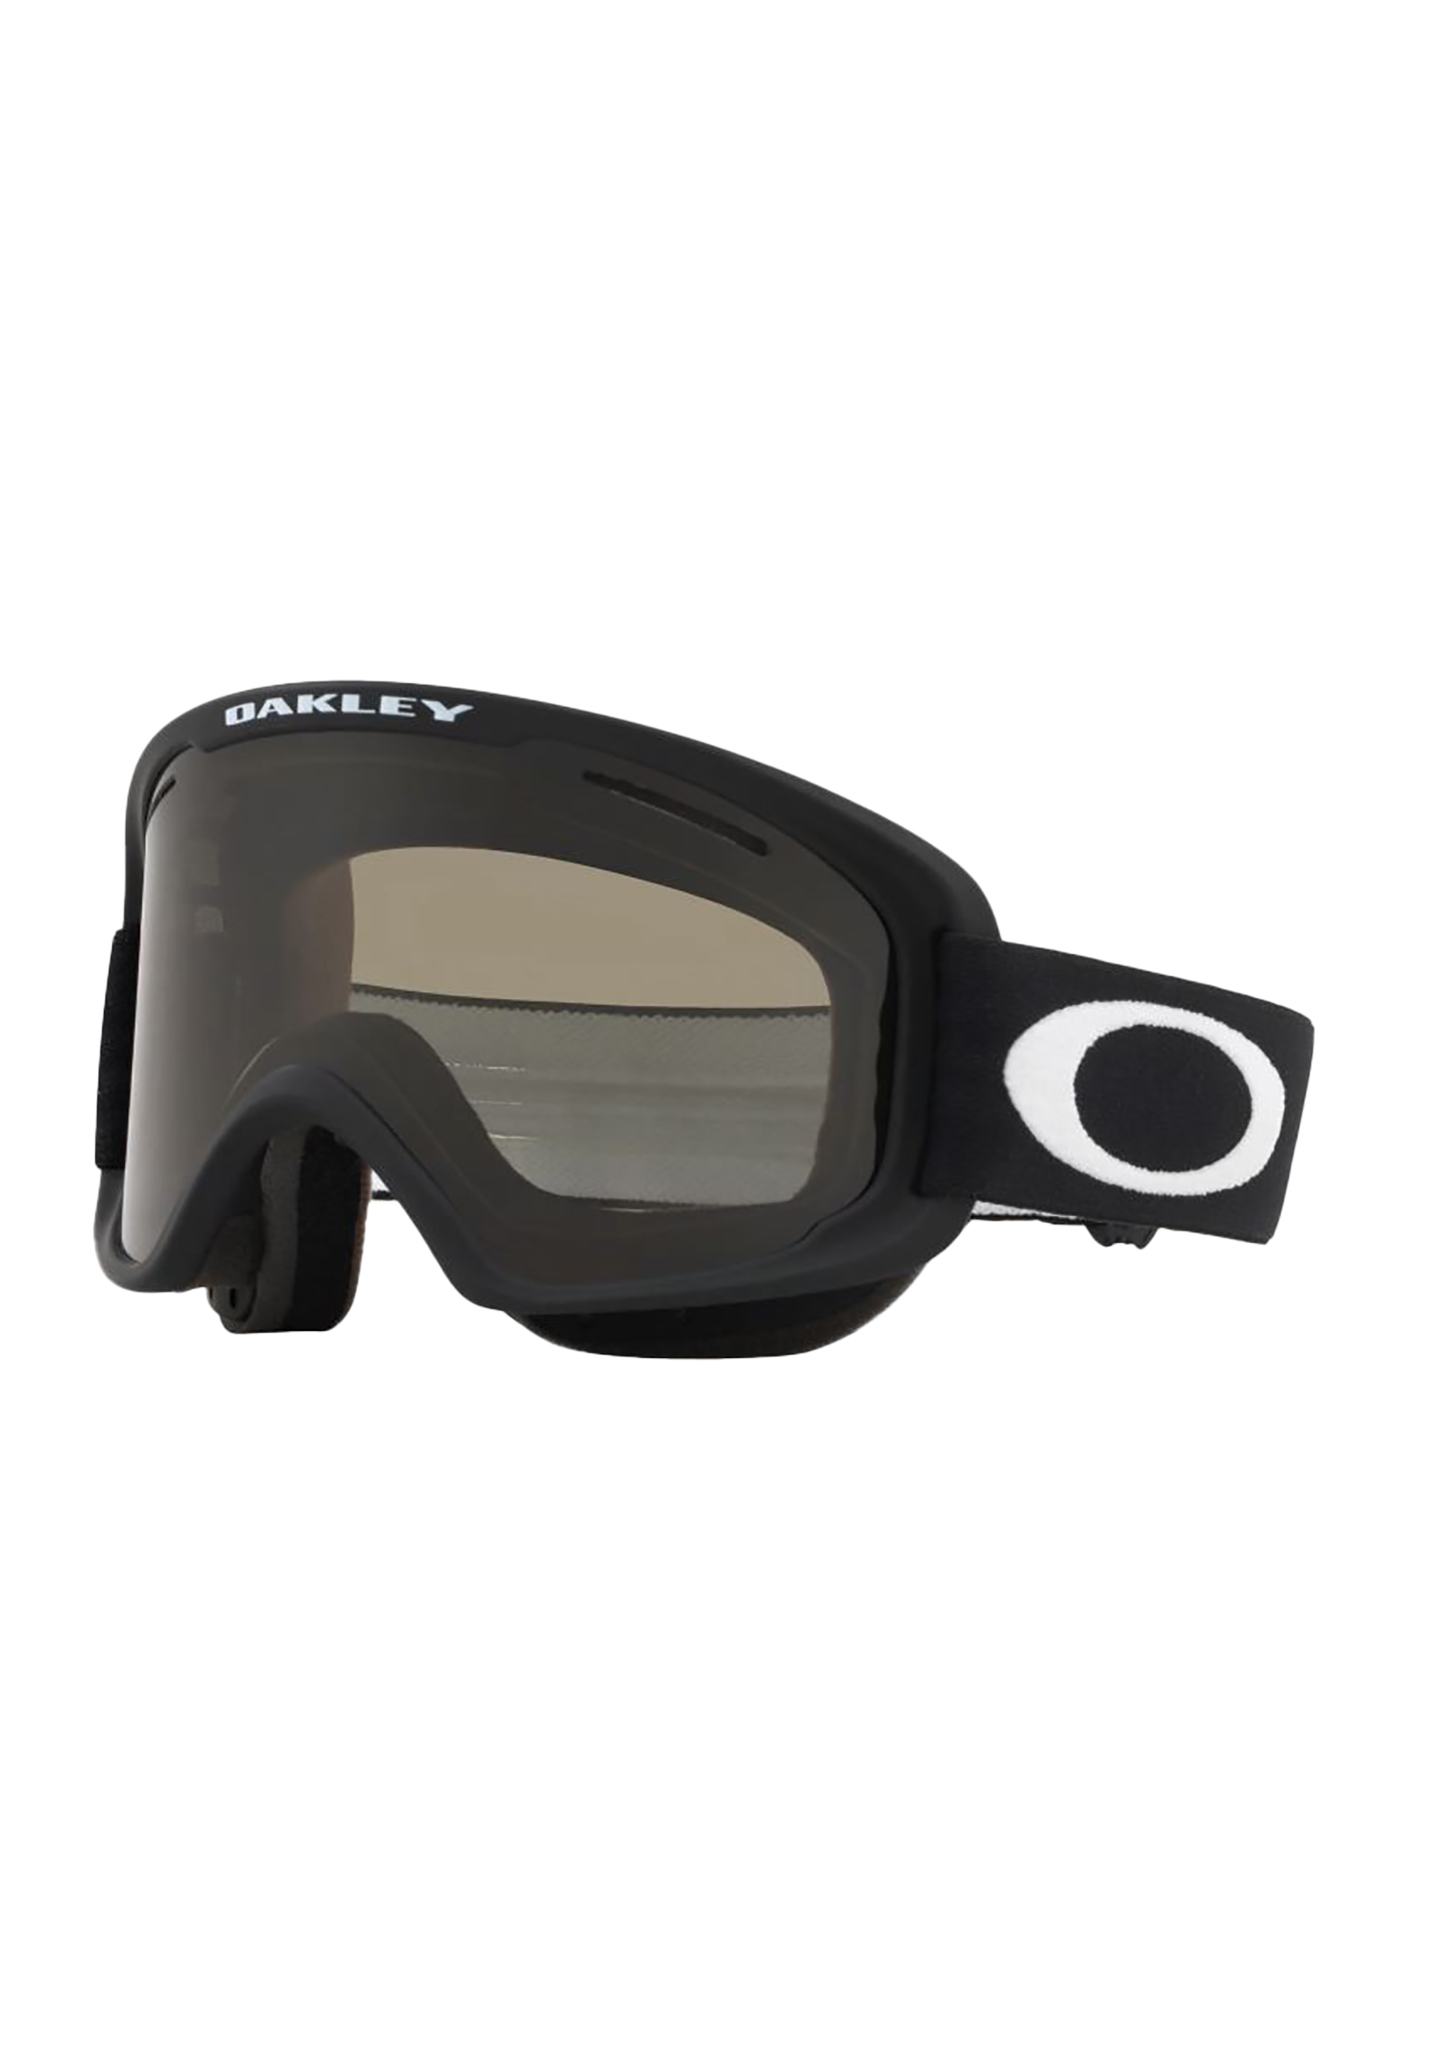 Oakley O Frame 2.0 Pro M Snowboardbrillen mattschwarz/dunkelgrau One Size